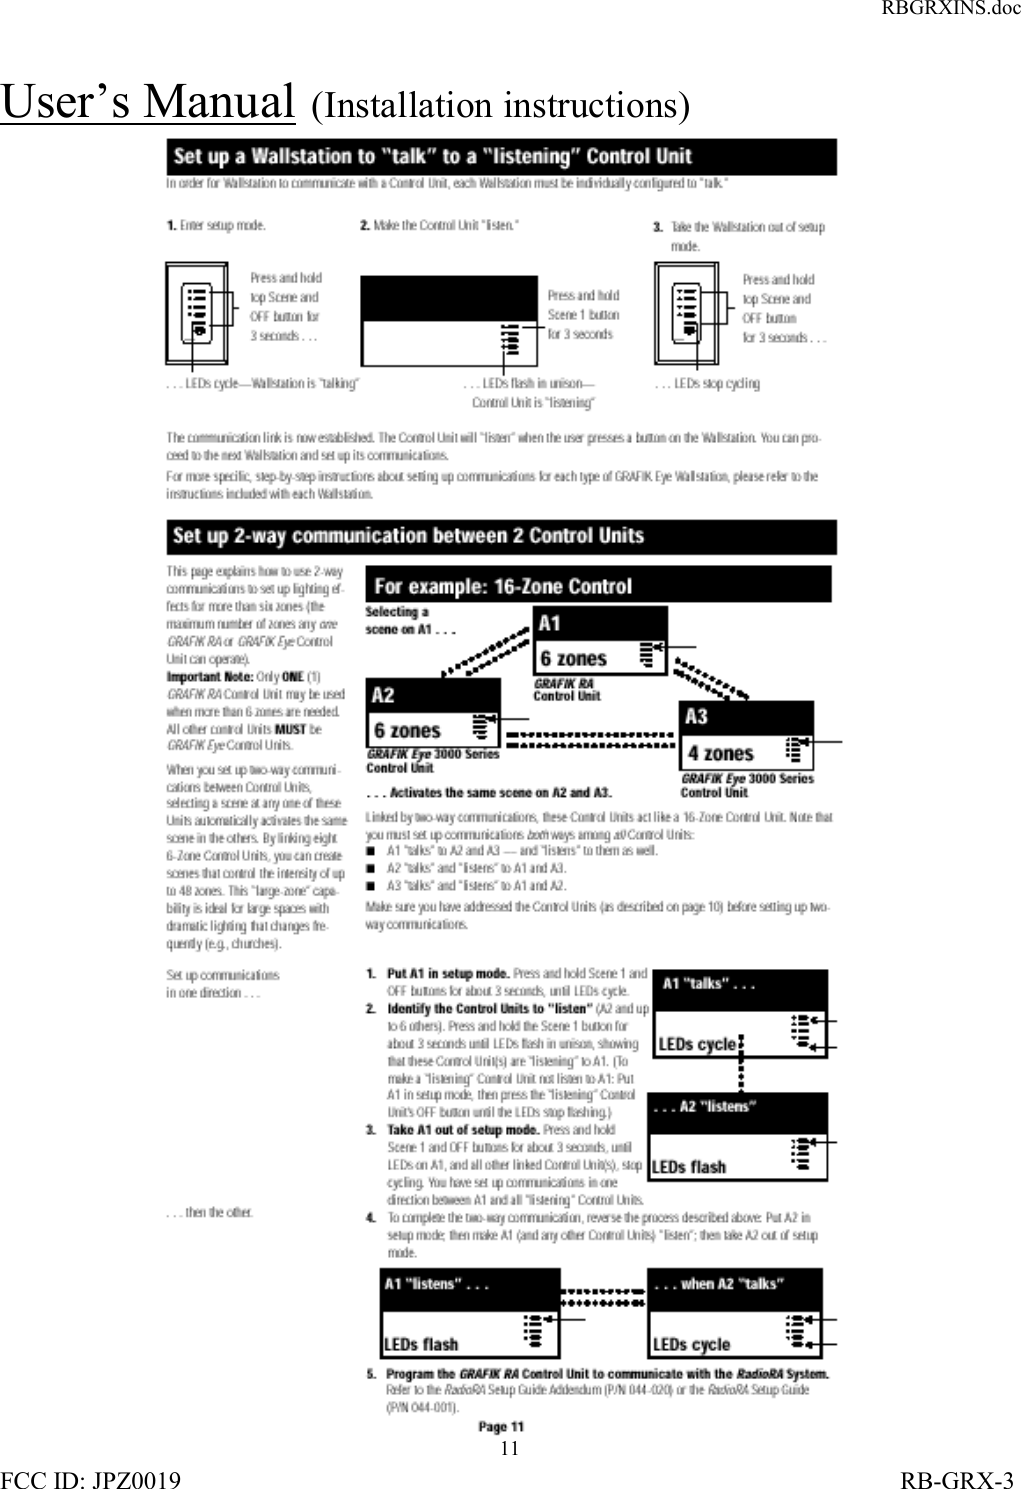 RBGRXINS.docFCC ID: JPZ0019                                                                                                                   RB-GRX-311User’s Manual  (Installation instructions)